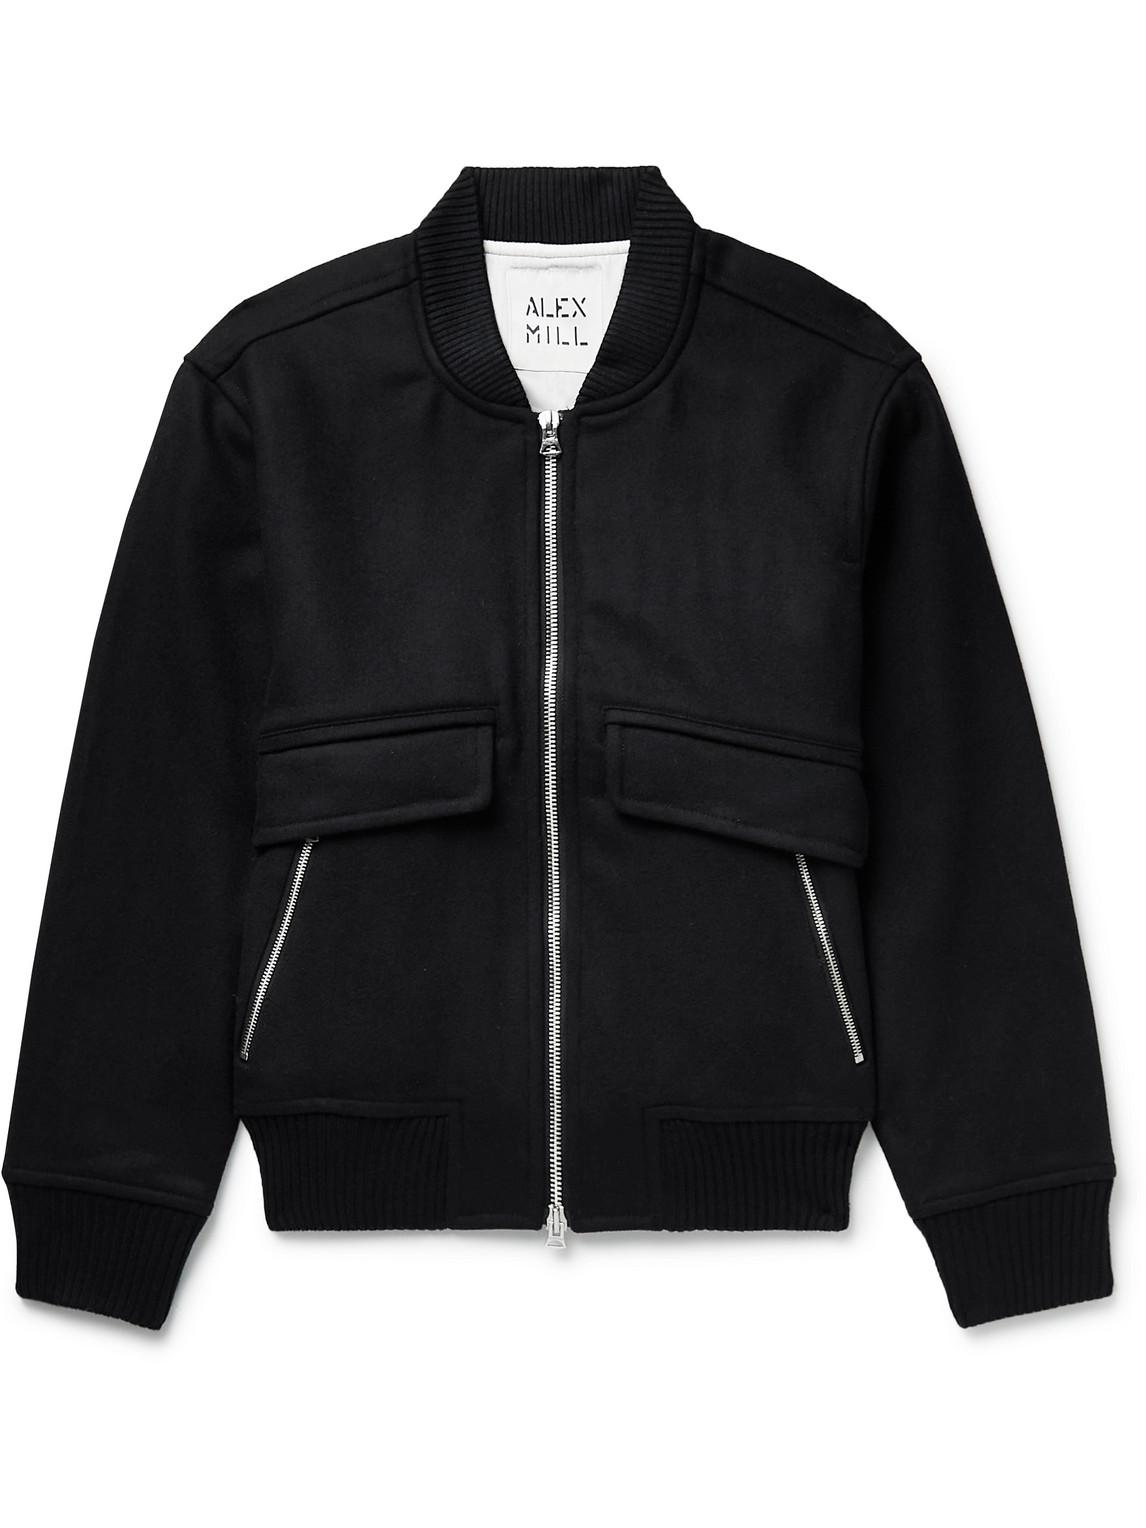 Alex Mill Melton Wool-blend Bomber Jacket in Black for Men | Lyst